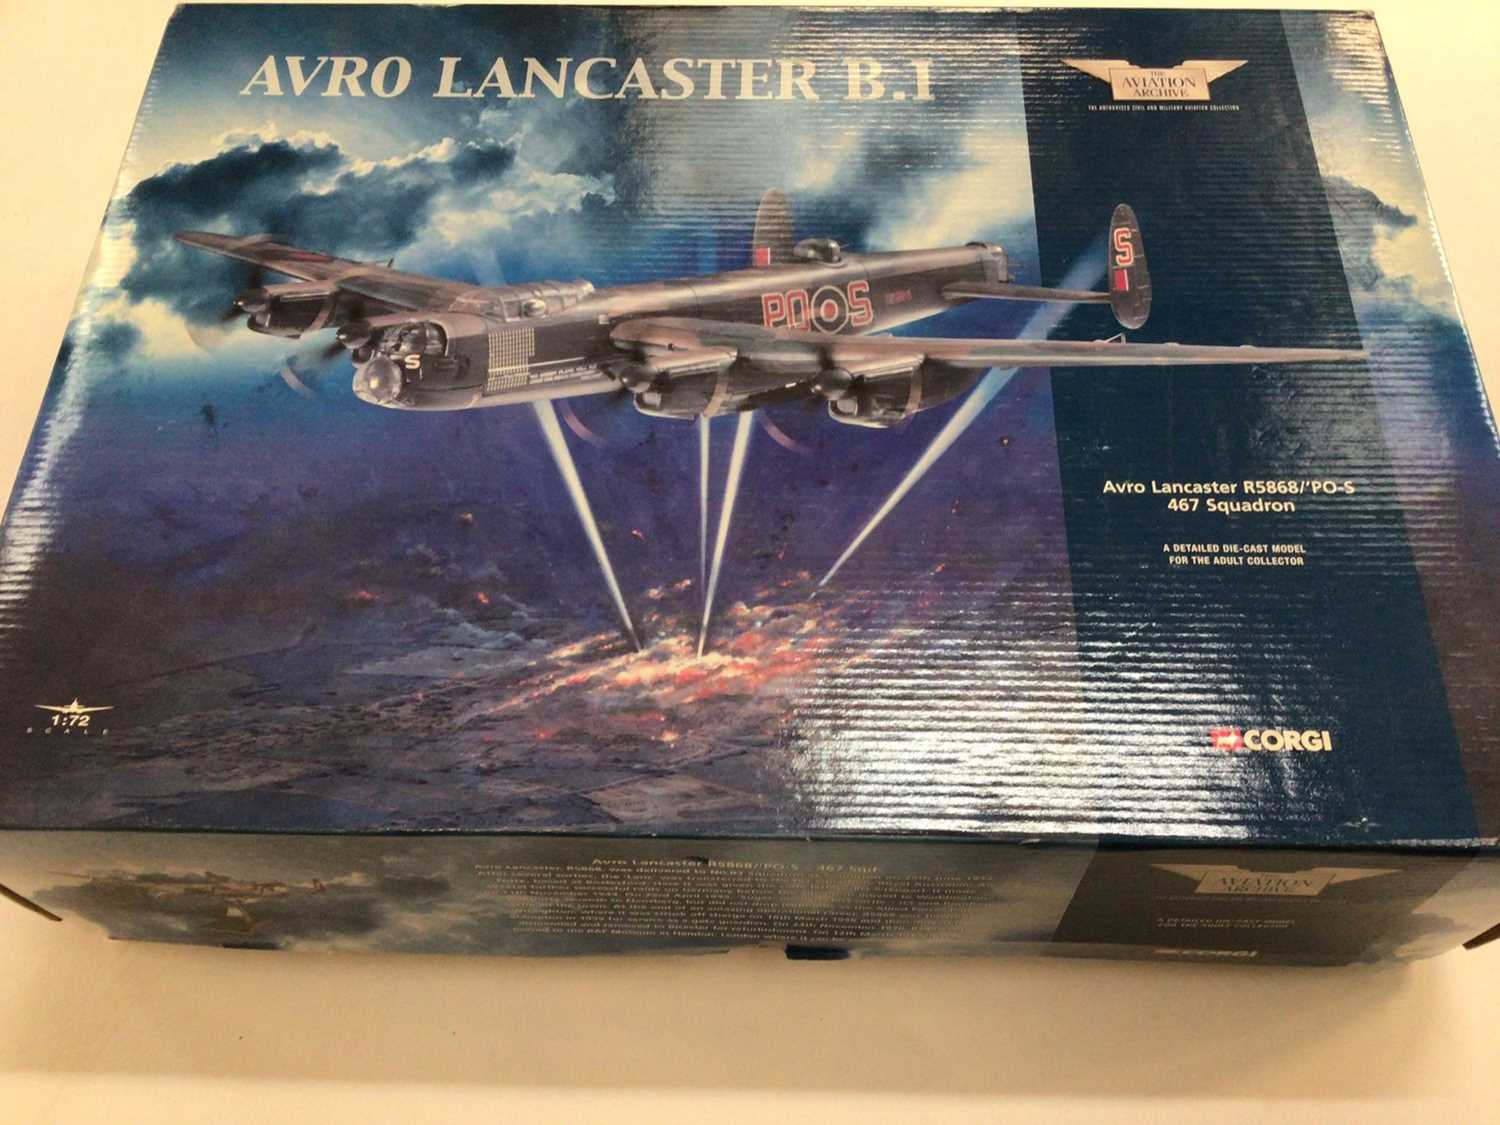 Boxed 1:72 scale AA32601 Avro Lancaster R5868/'PO-S - 467 Sqd